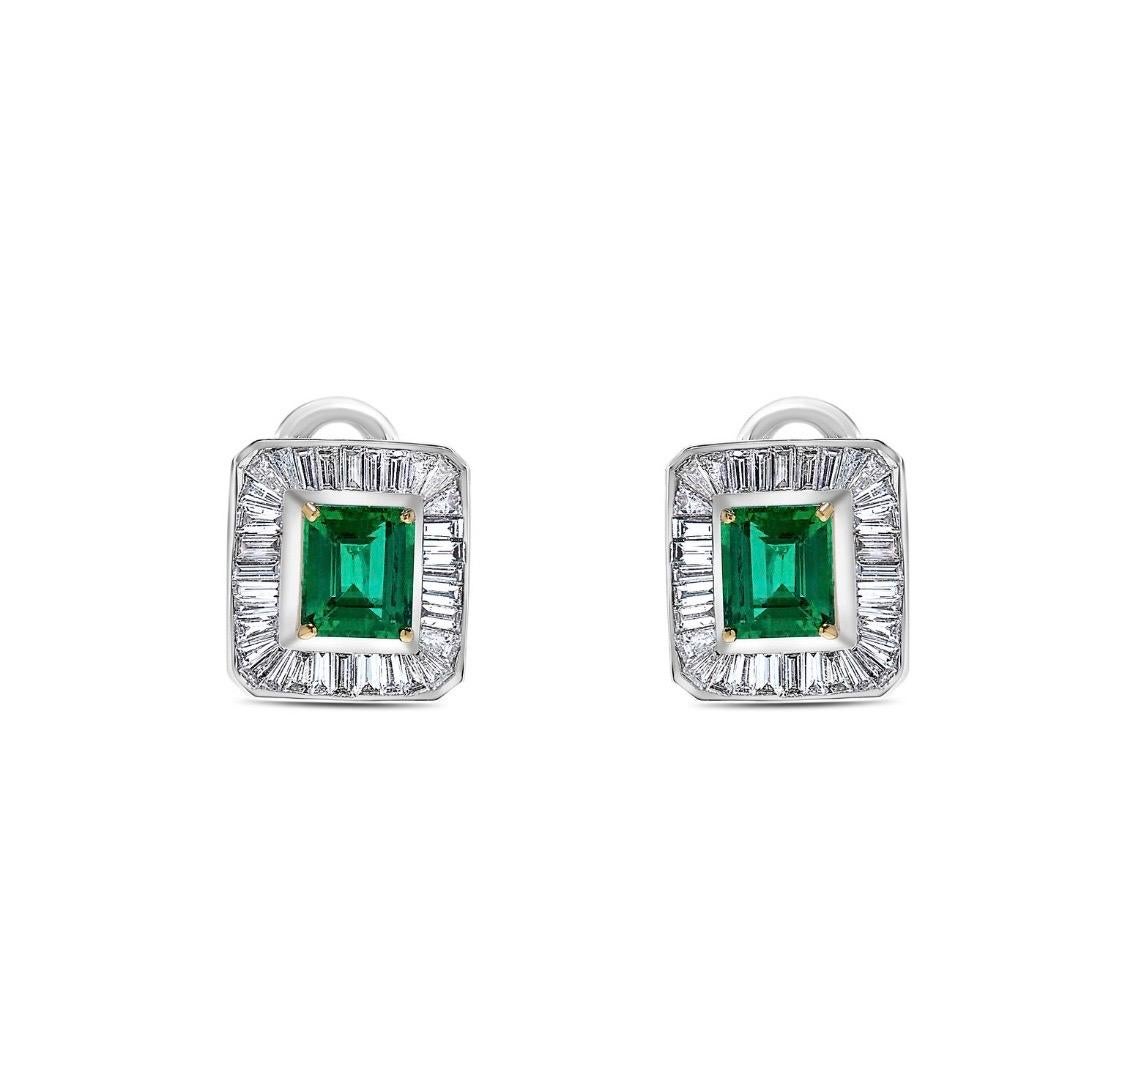 Emerald Cut Emilio Jewelry Certified 5.30 Carat Colombian Emerald Diamond Earrings